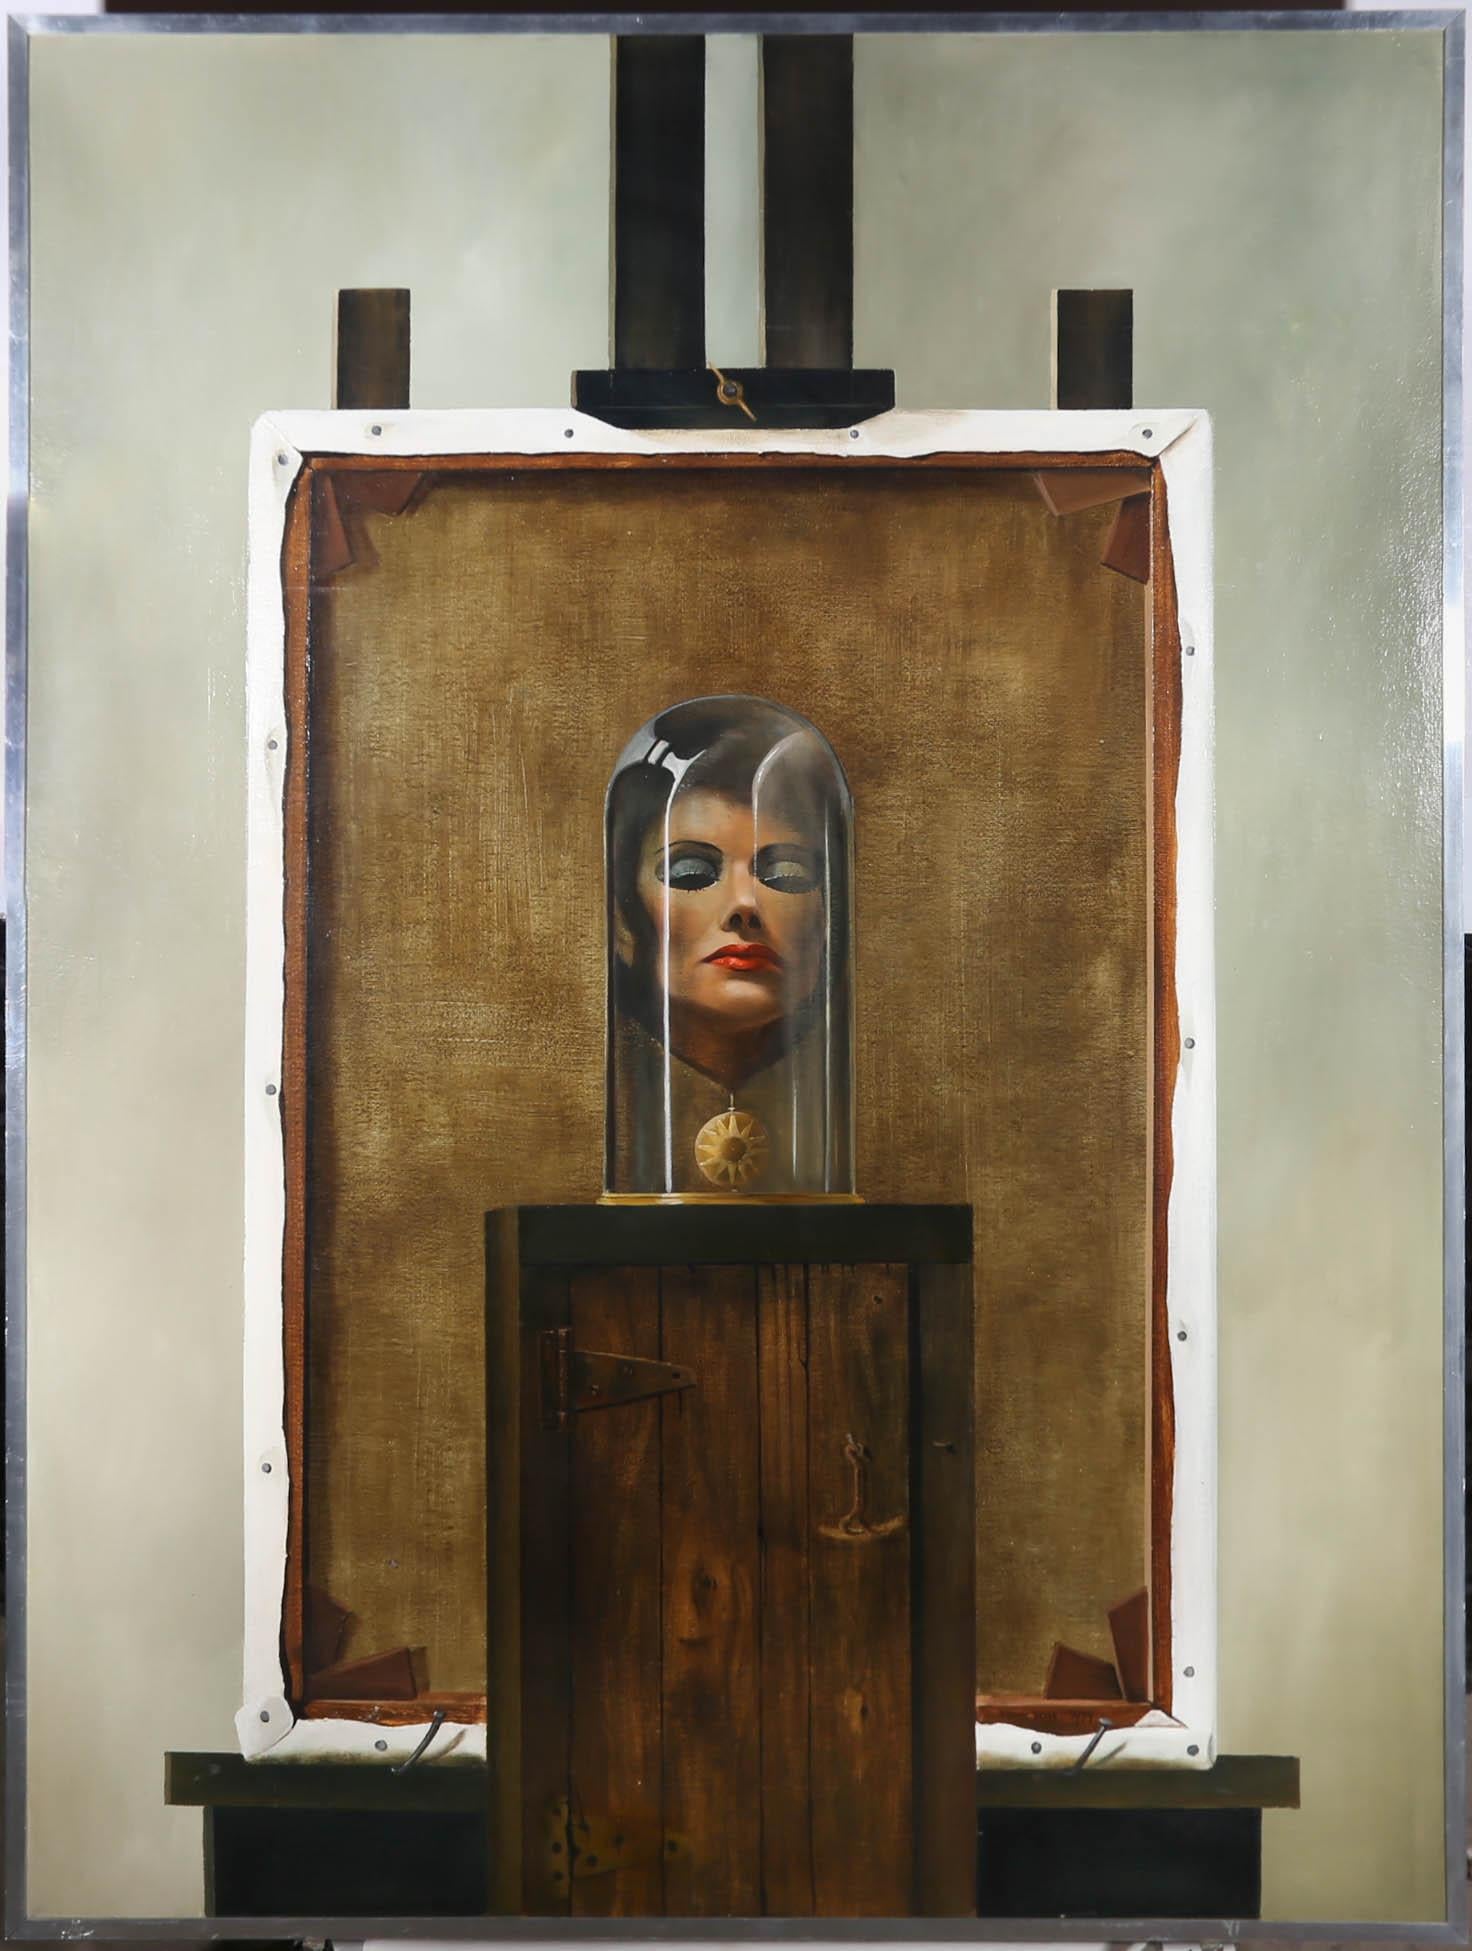  John Voss Portrait Painting - John Voss - Very Large 1979 Sur - Very Large 1979 Surrealist Oil, The Glass Dome